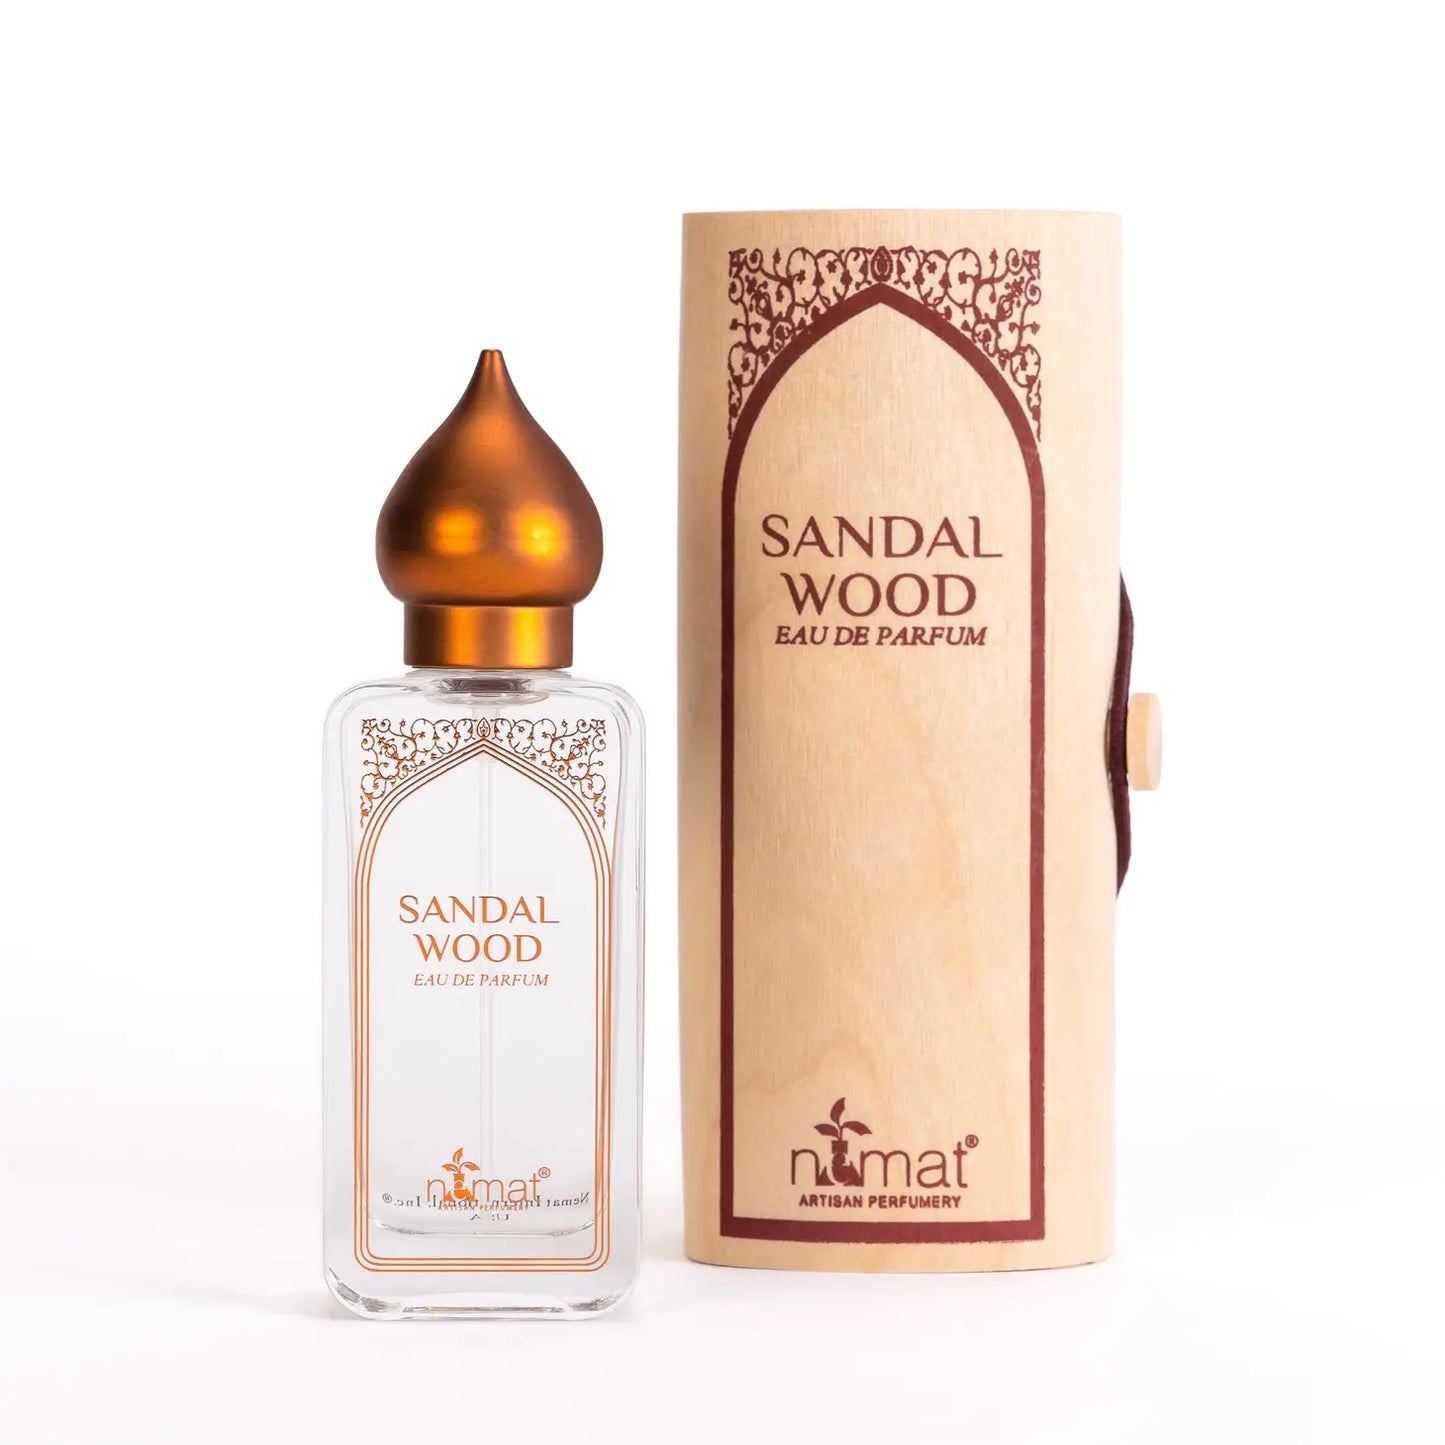 The SANDALWOOD Eau de Perfum